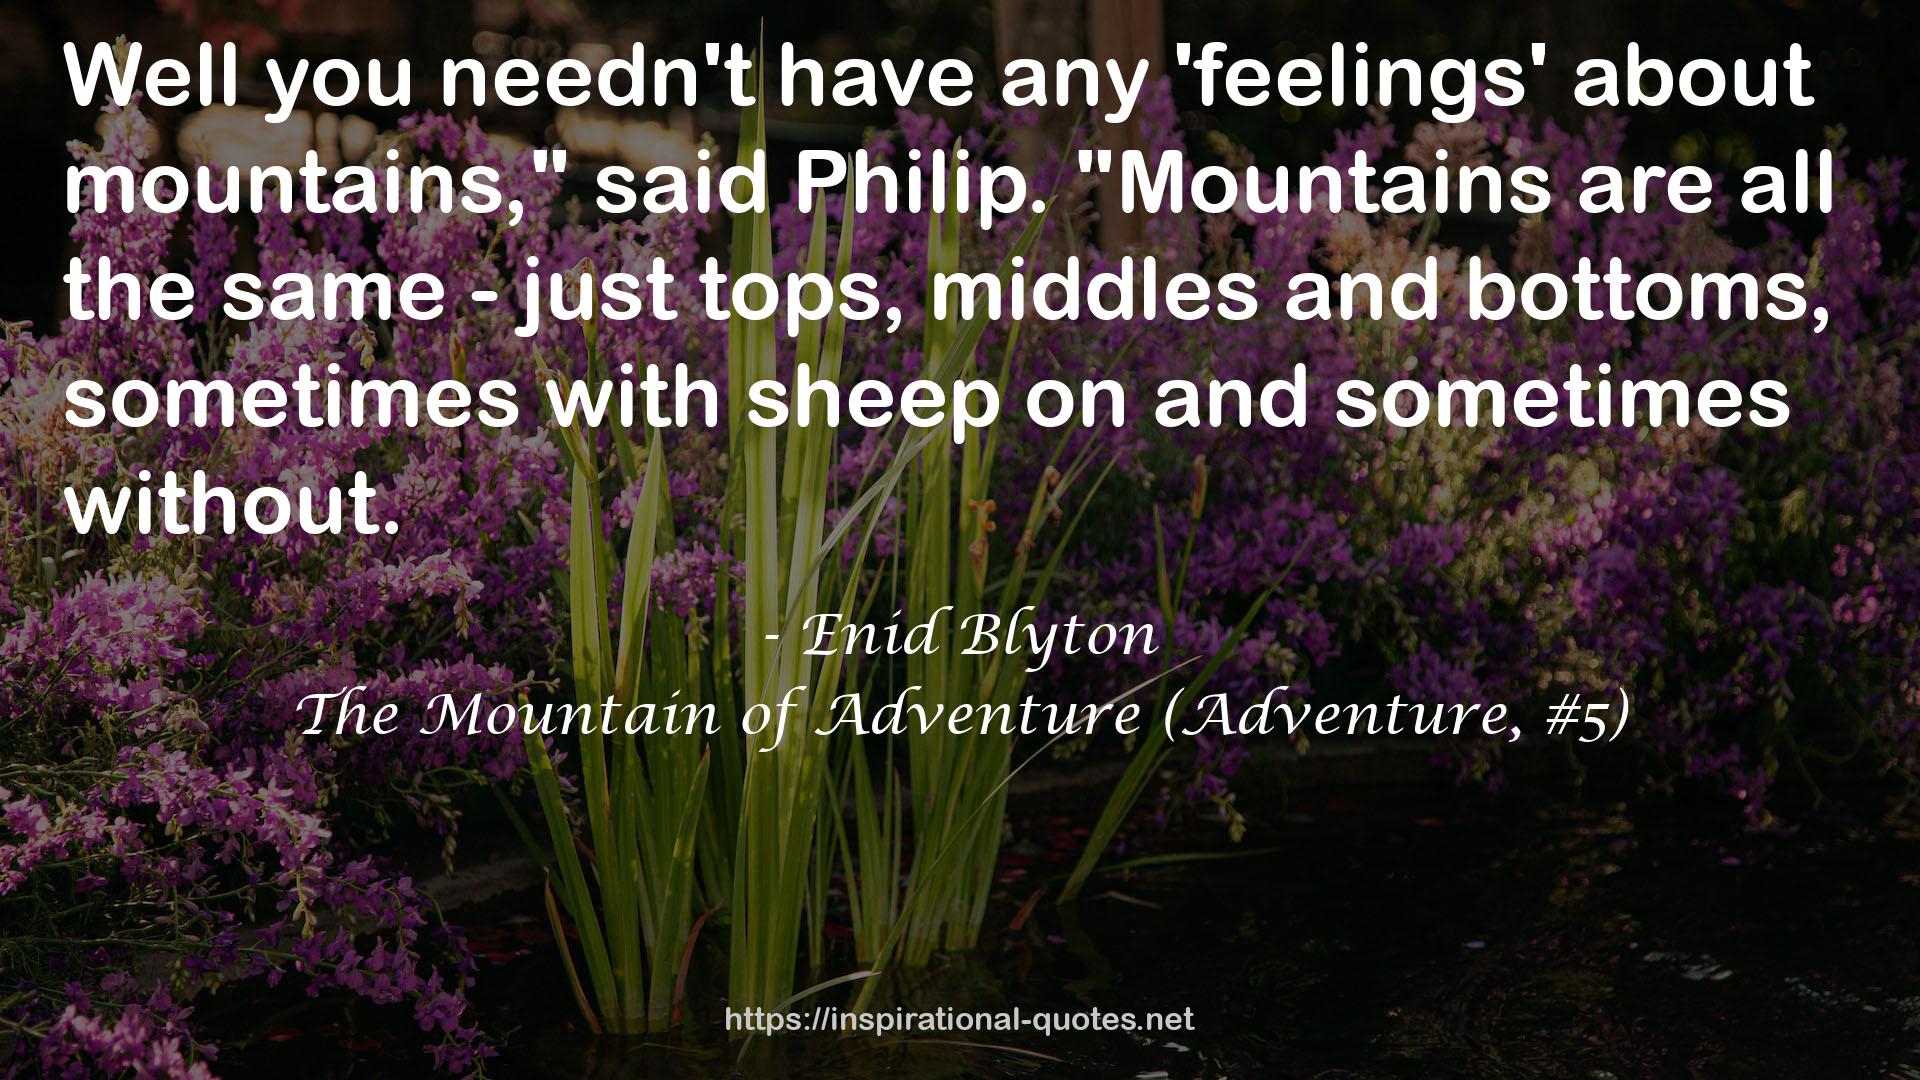 The Mountain of Adventure (Adventure, #5) QUOTES